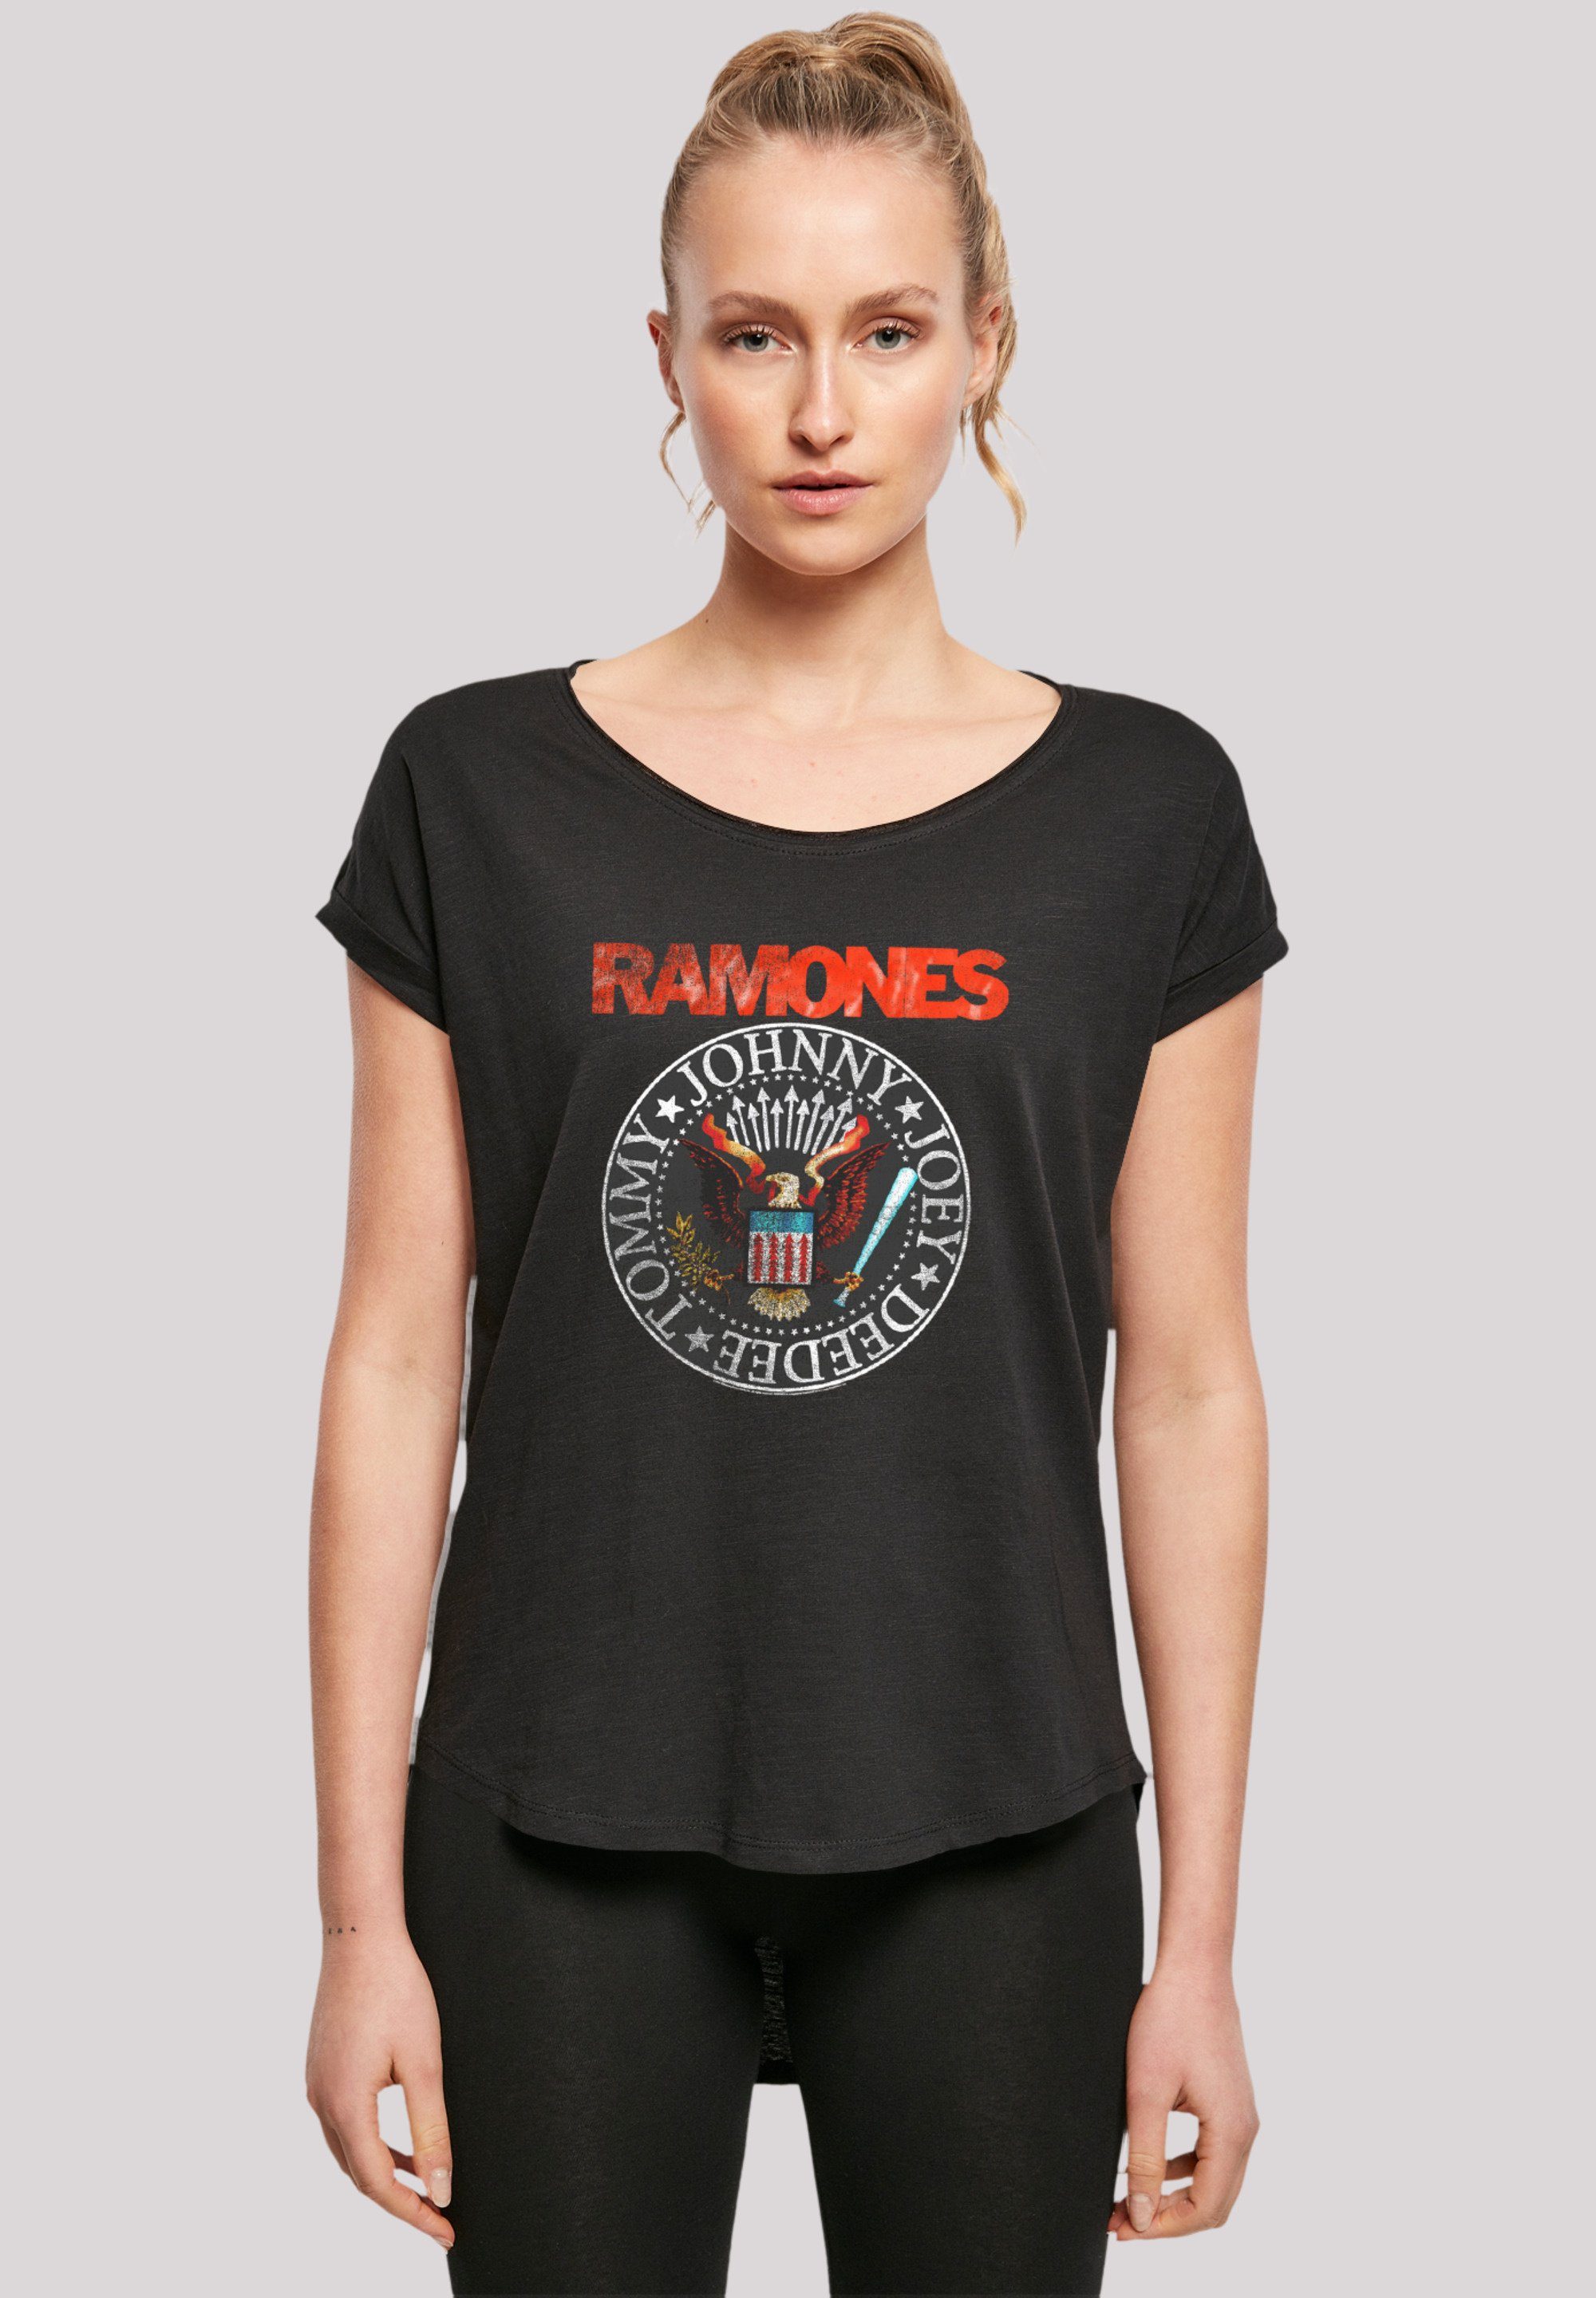 Damen lang geschnittenes Band, T-Shirt F4NT4STIC Rock Musik Hinten Qualität, Premium T-Shirt Ramones extra EAGLE Band Rock-Musik, VINTAGE SEAL